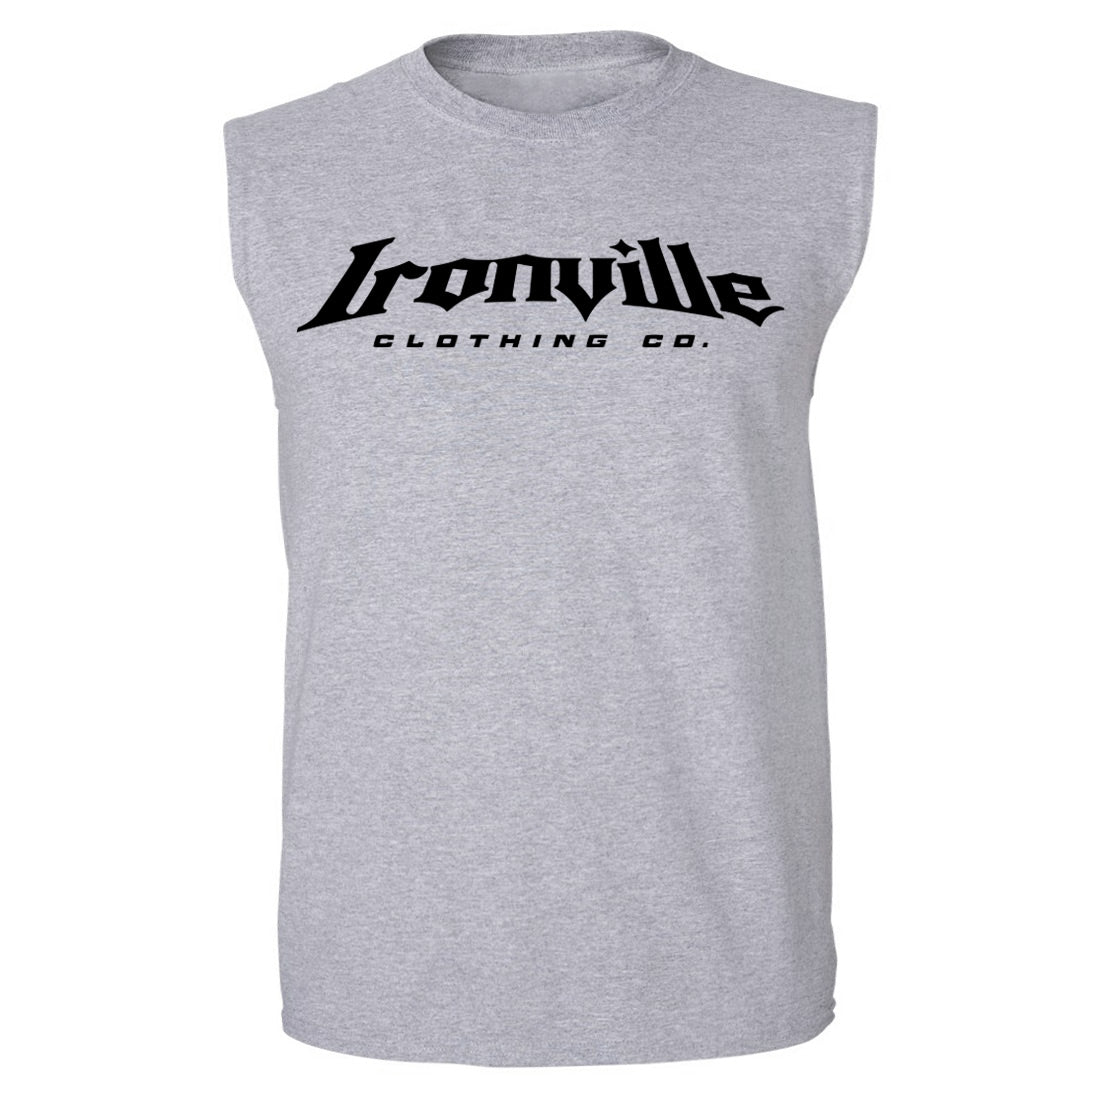 Ironville BATTLE TESTED Sleeveless Muscle T-shirt